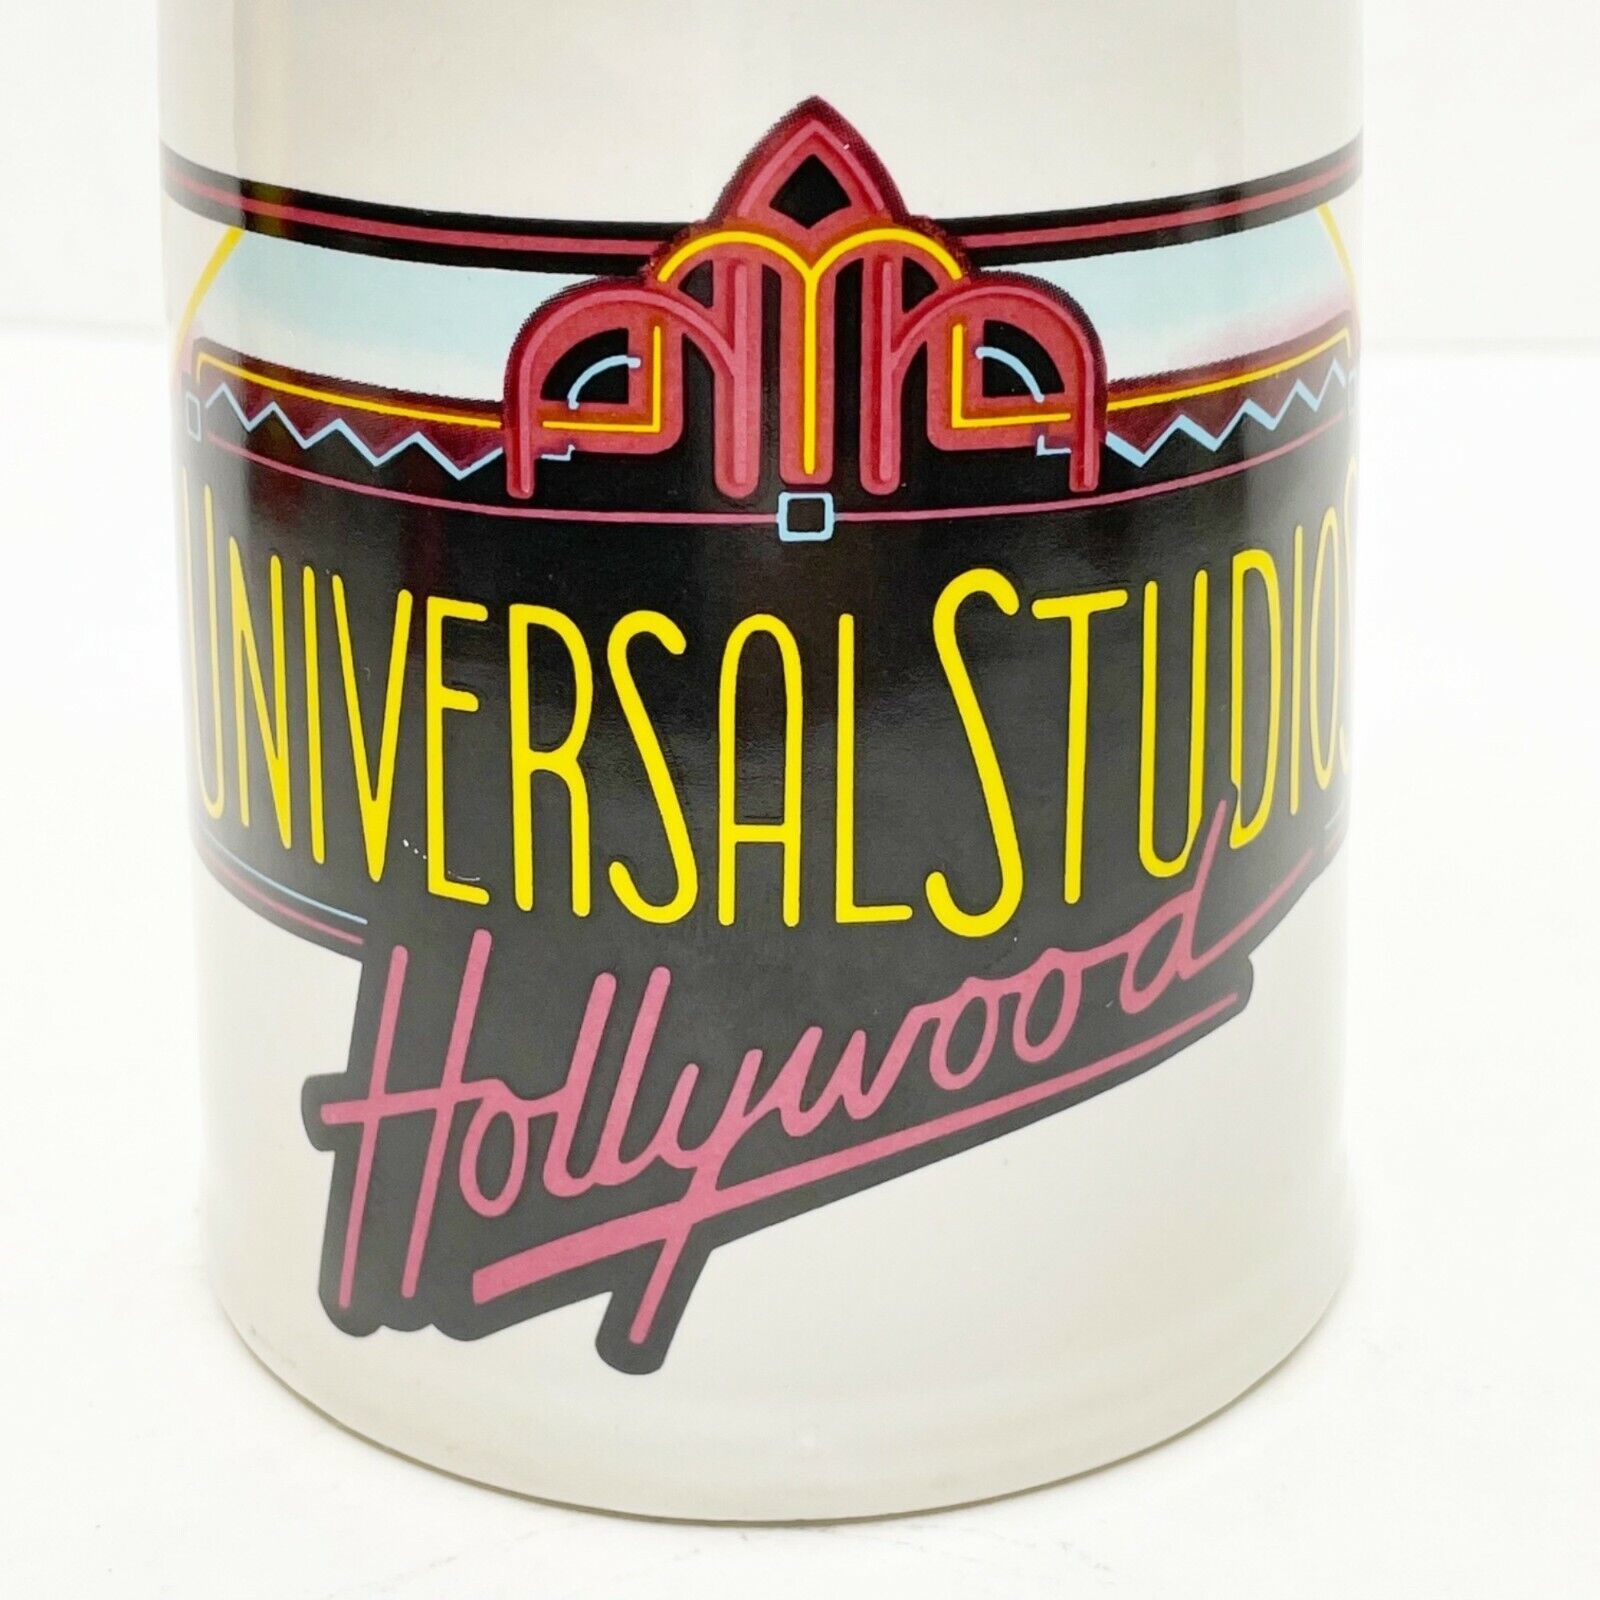 Primary image for Vintage Universal Studios Hollywood Mug Tankard Stein Ceramic Made in Korea